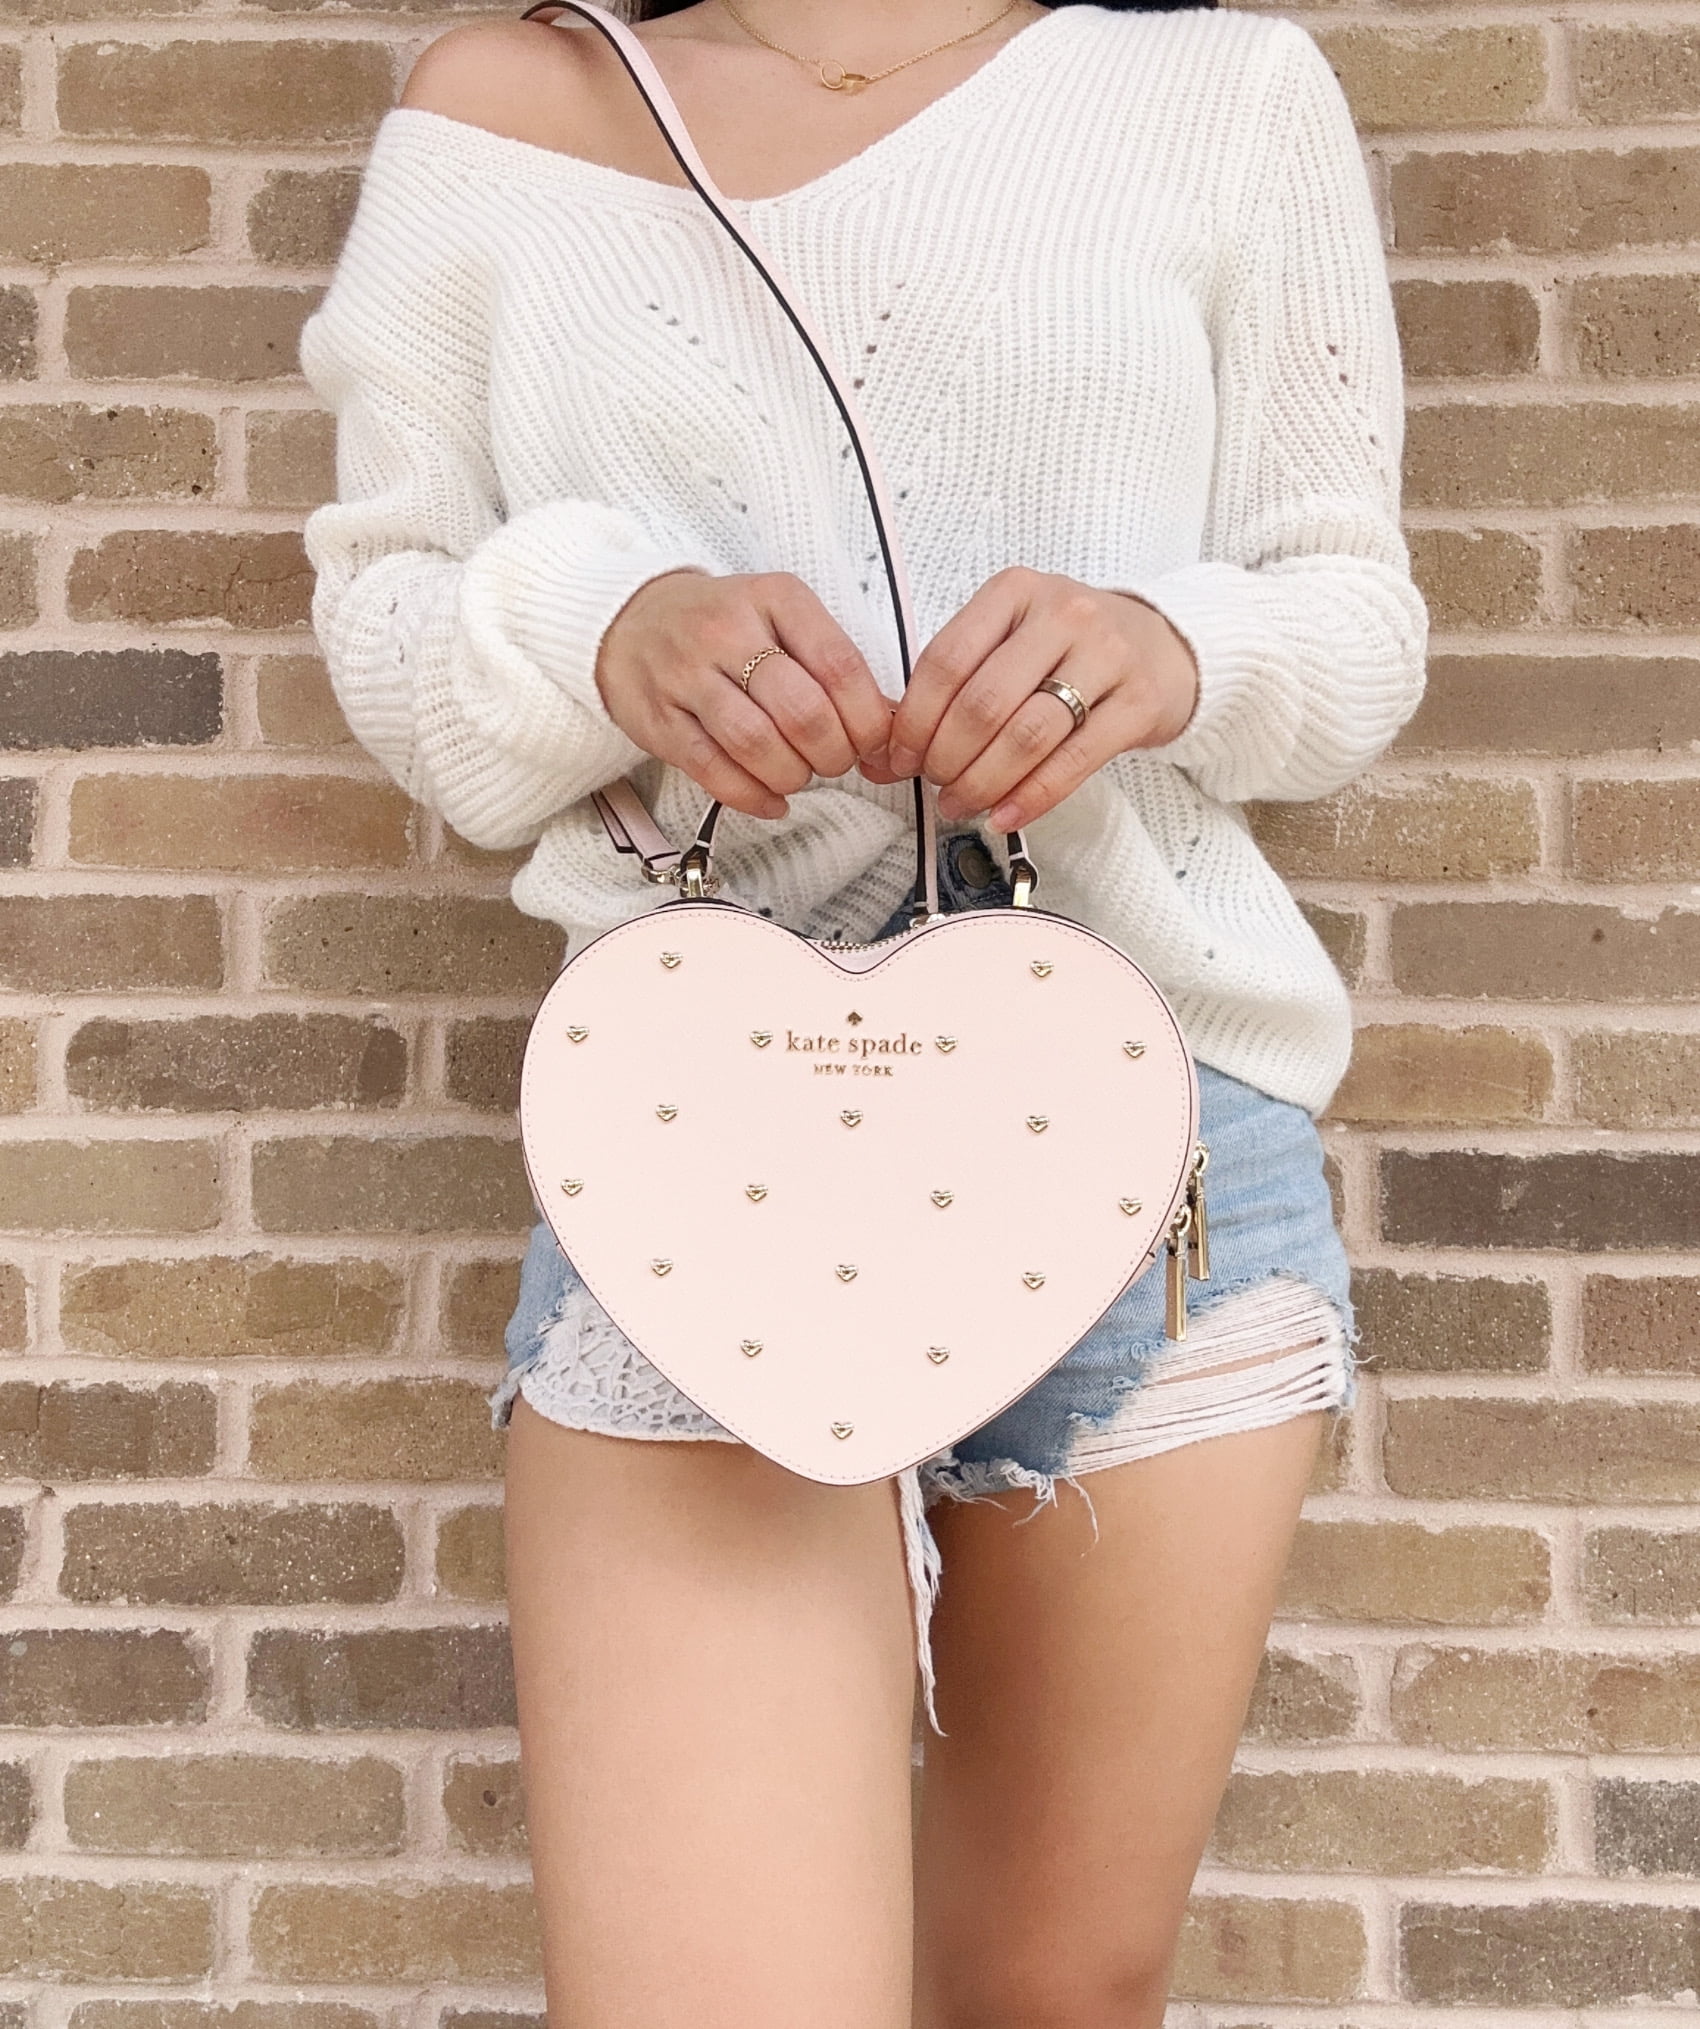 Kate spade purse Love Shack Mini Heart Crossbody Bag mango ice